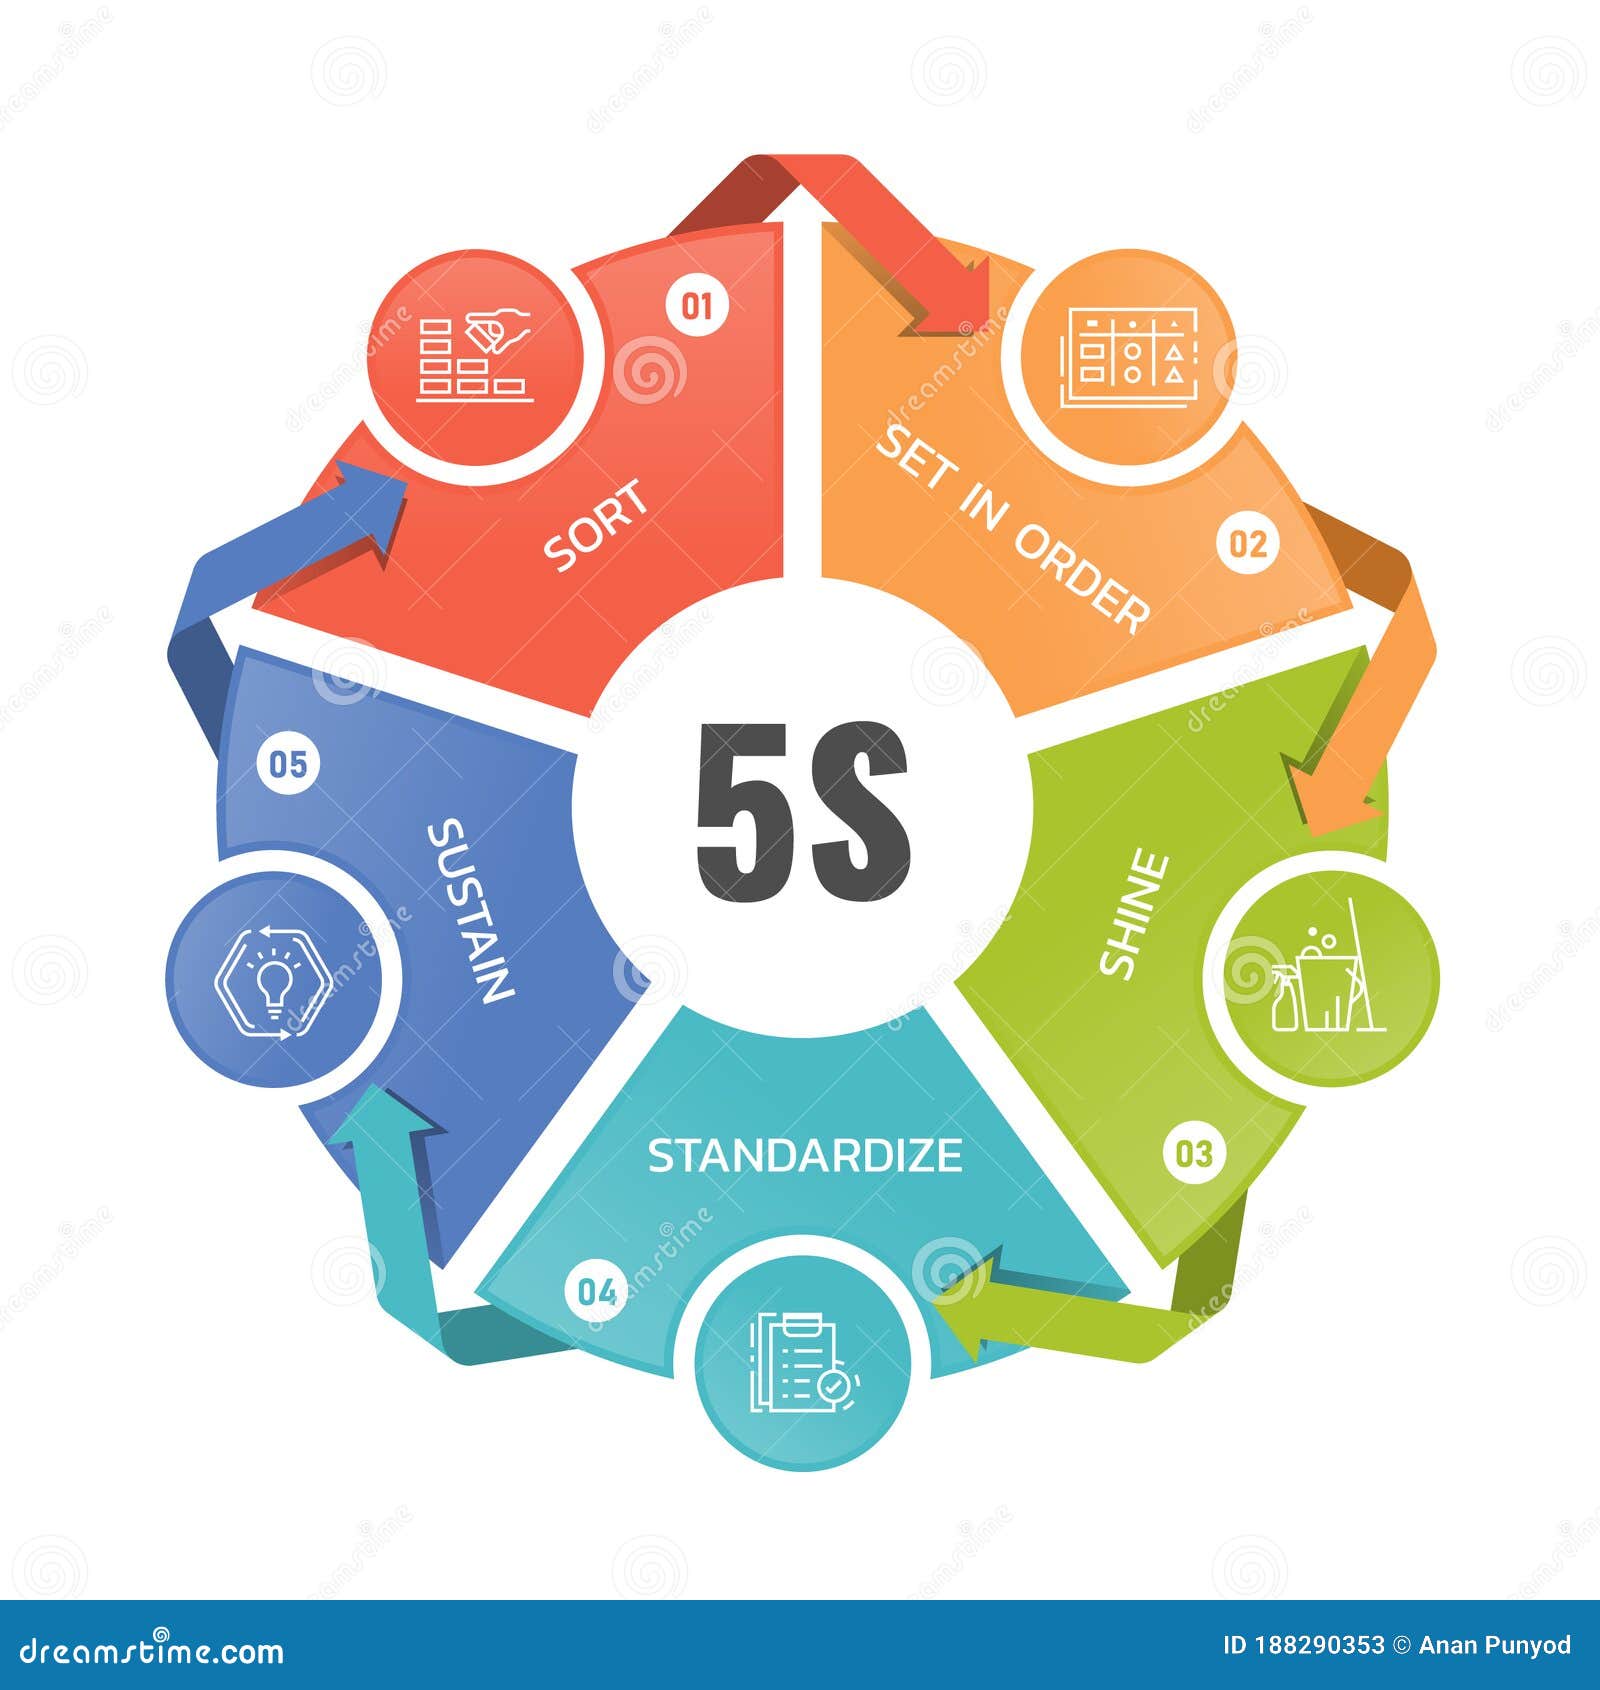 5s Methodology - Sort, Set in Order, Shine, Standardize and Sustain ...